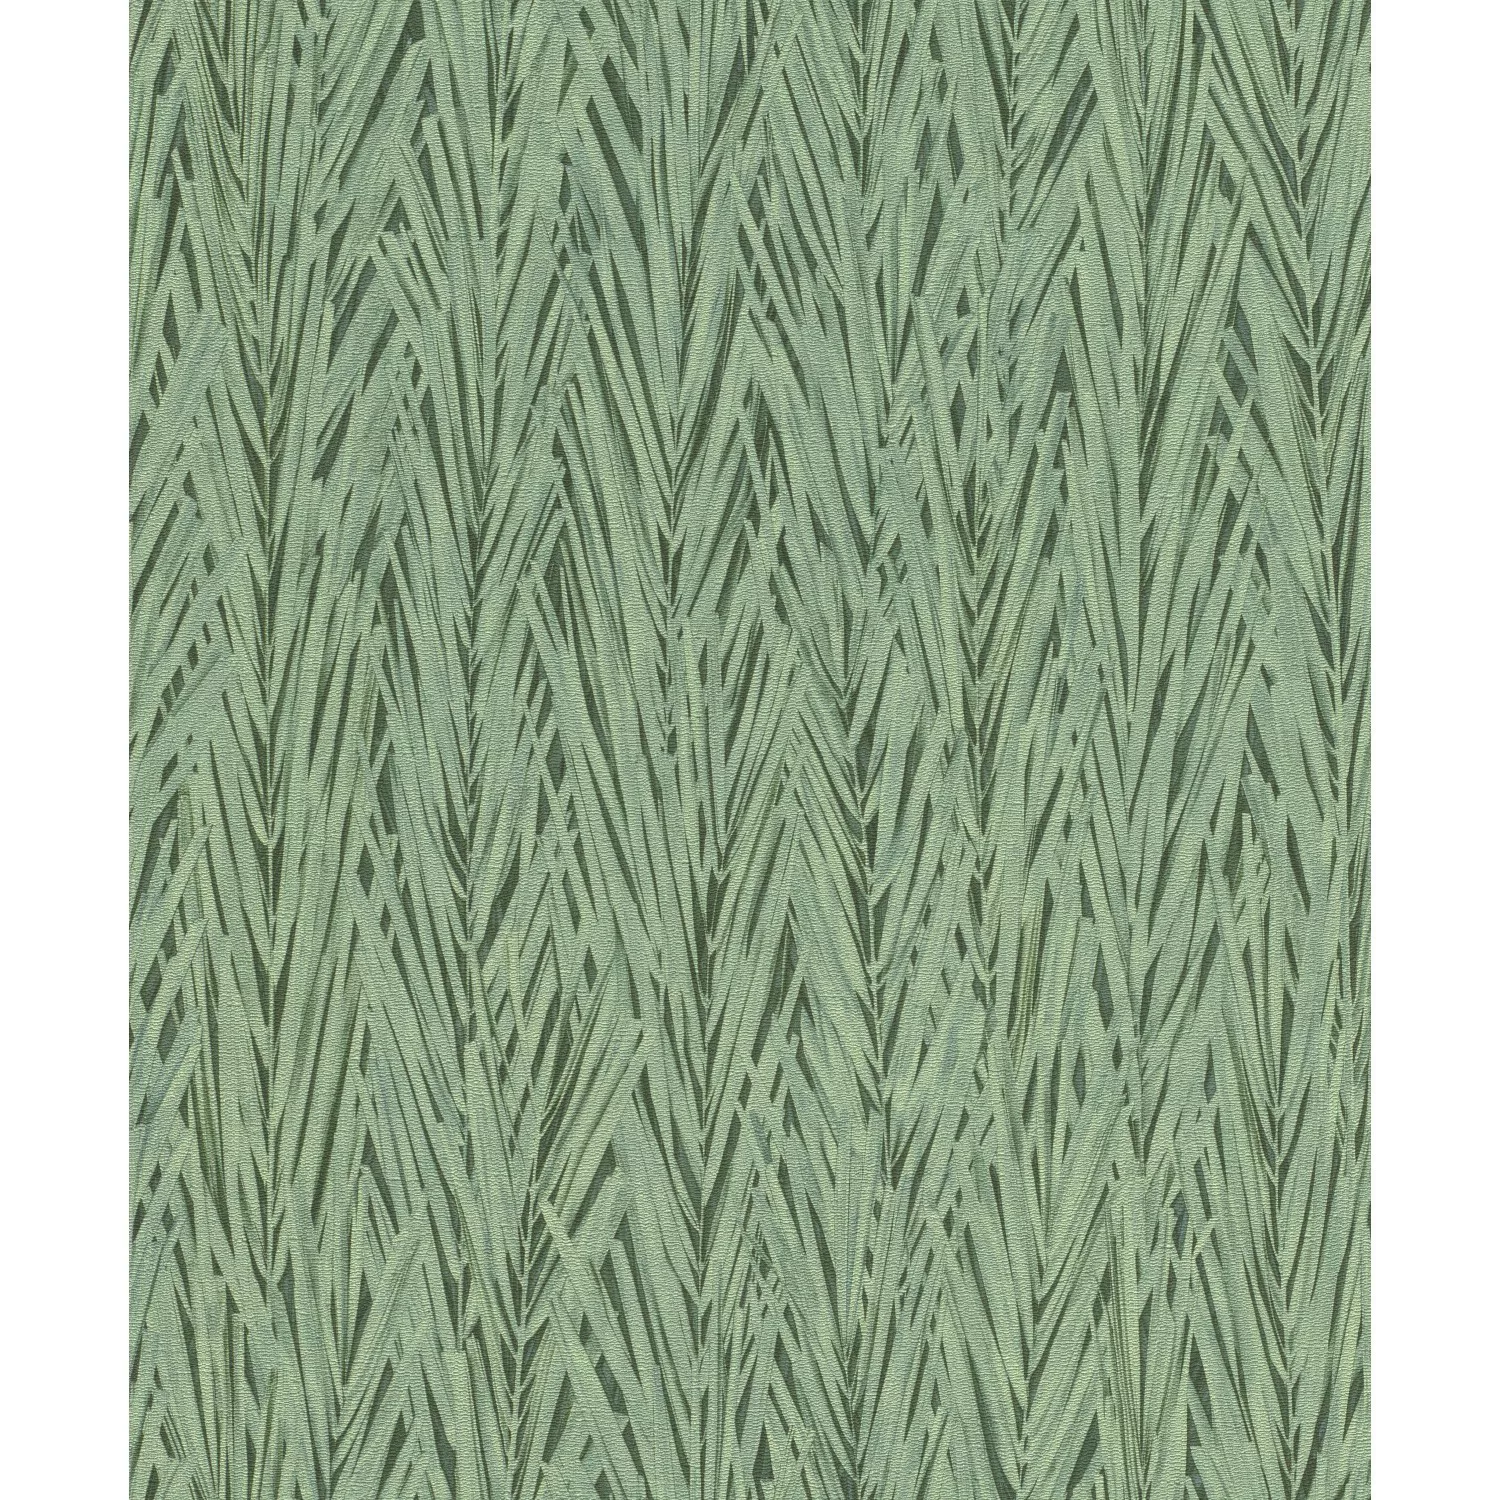 Rasch Vliestapete Composition 554175 Palmenblätter Hellgrün 10,05 mx0,53m günstig online kaufen